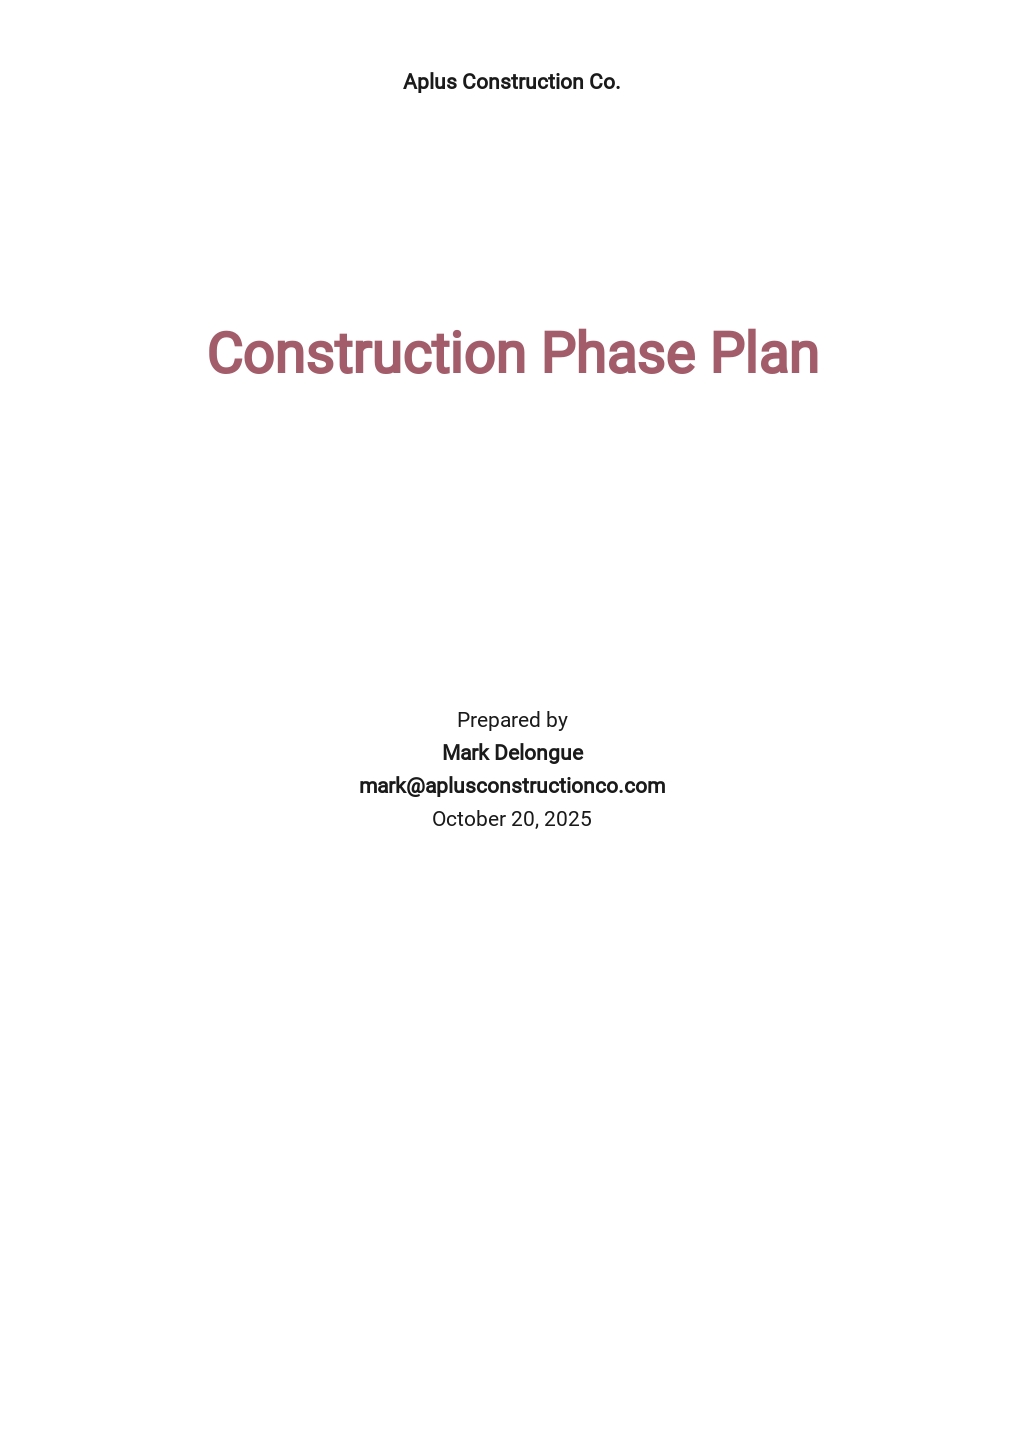 Basic Construction Phase Plan Template [Free PDF] - Google Docs, Word ...